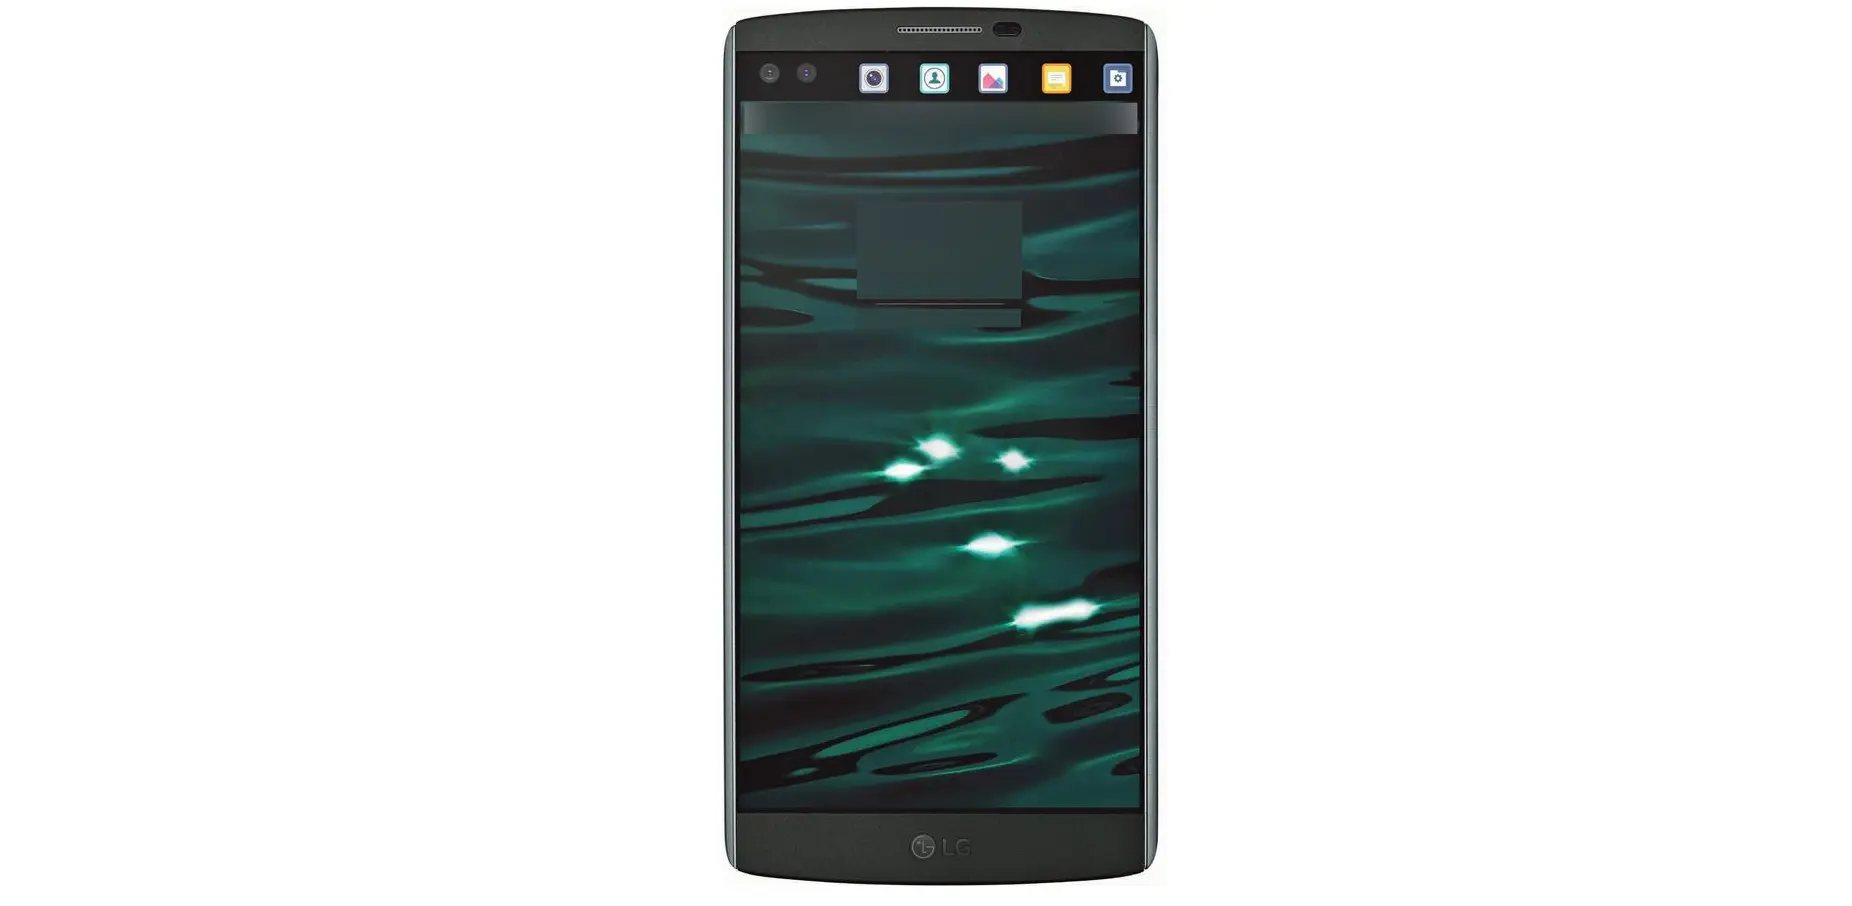 LG V10 tendría dos pantallas, según fotografía filtrada